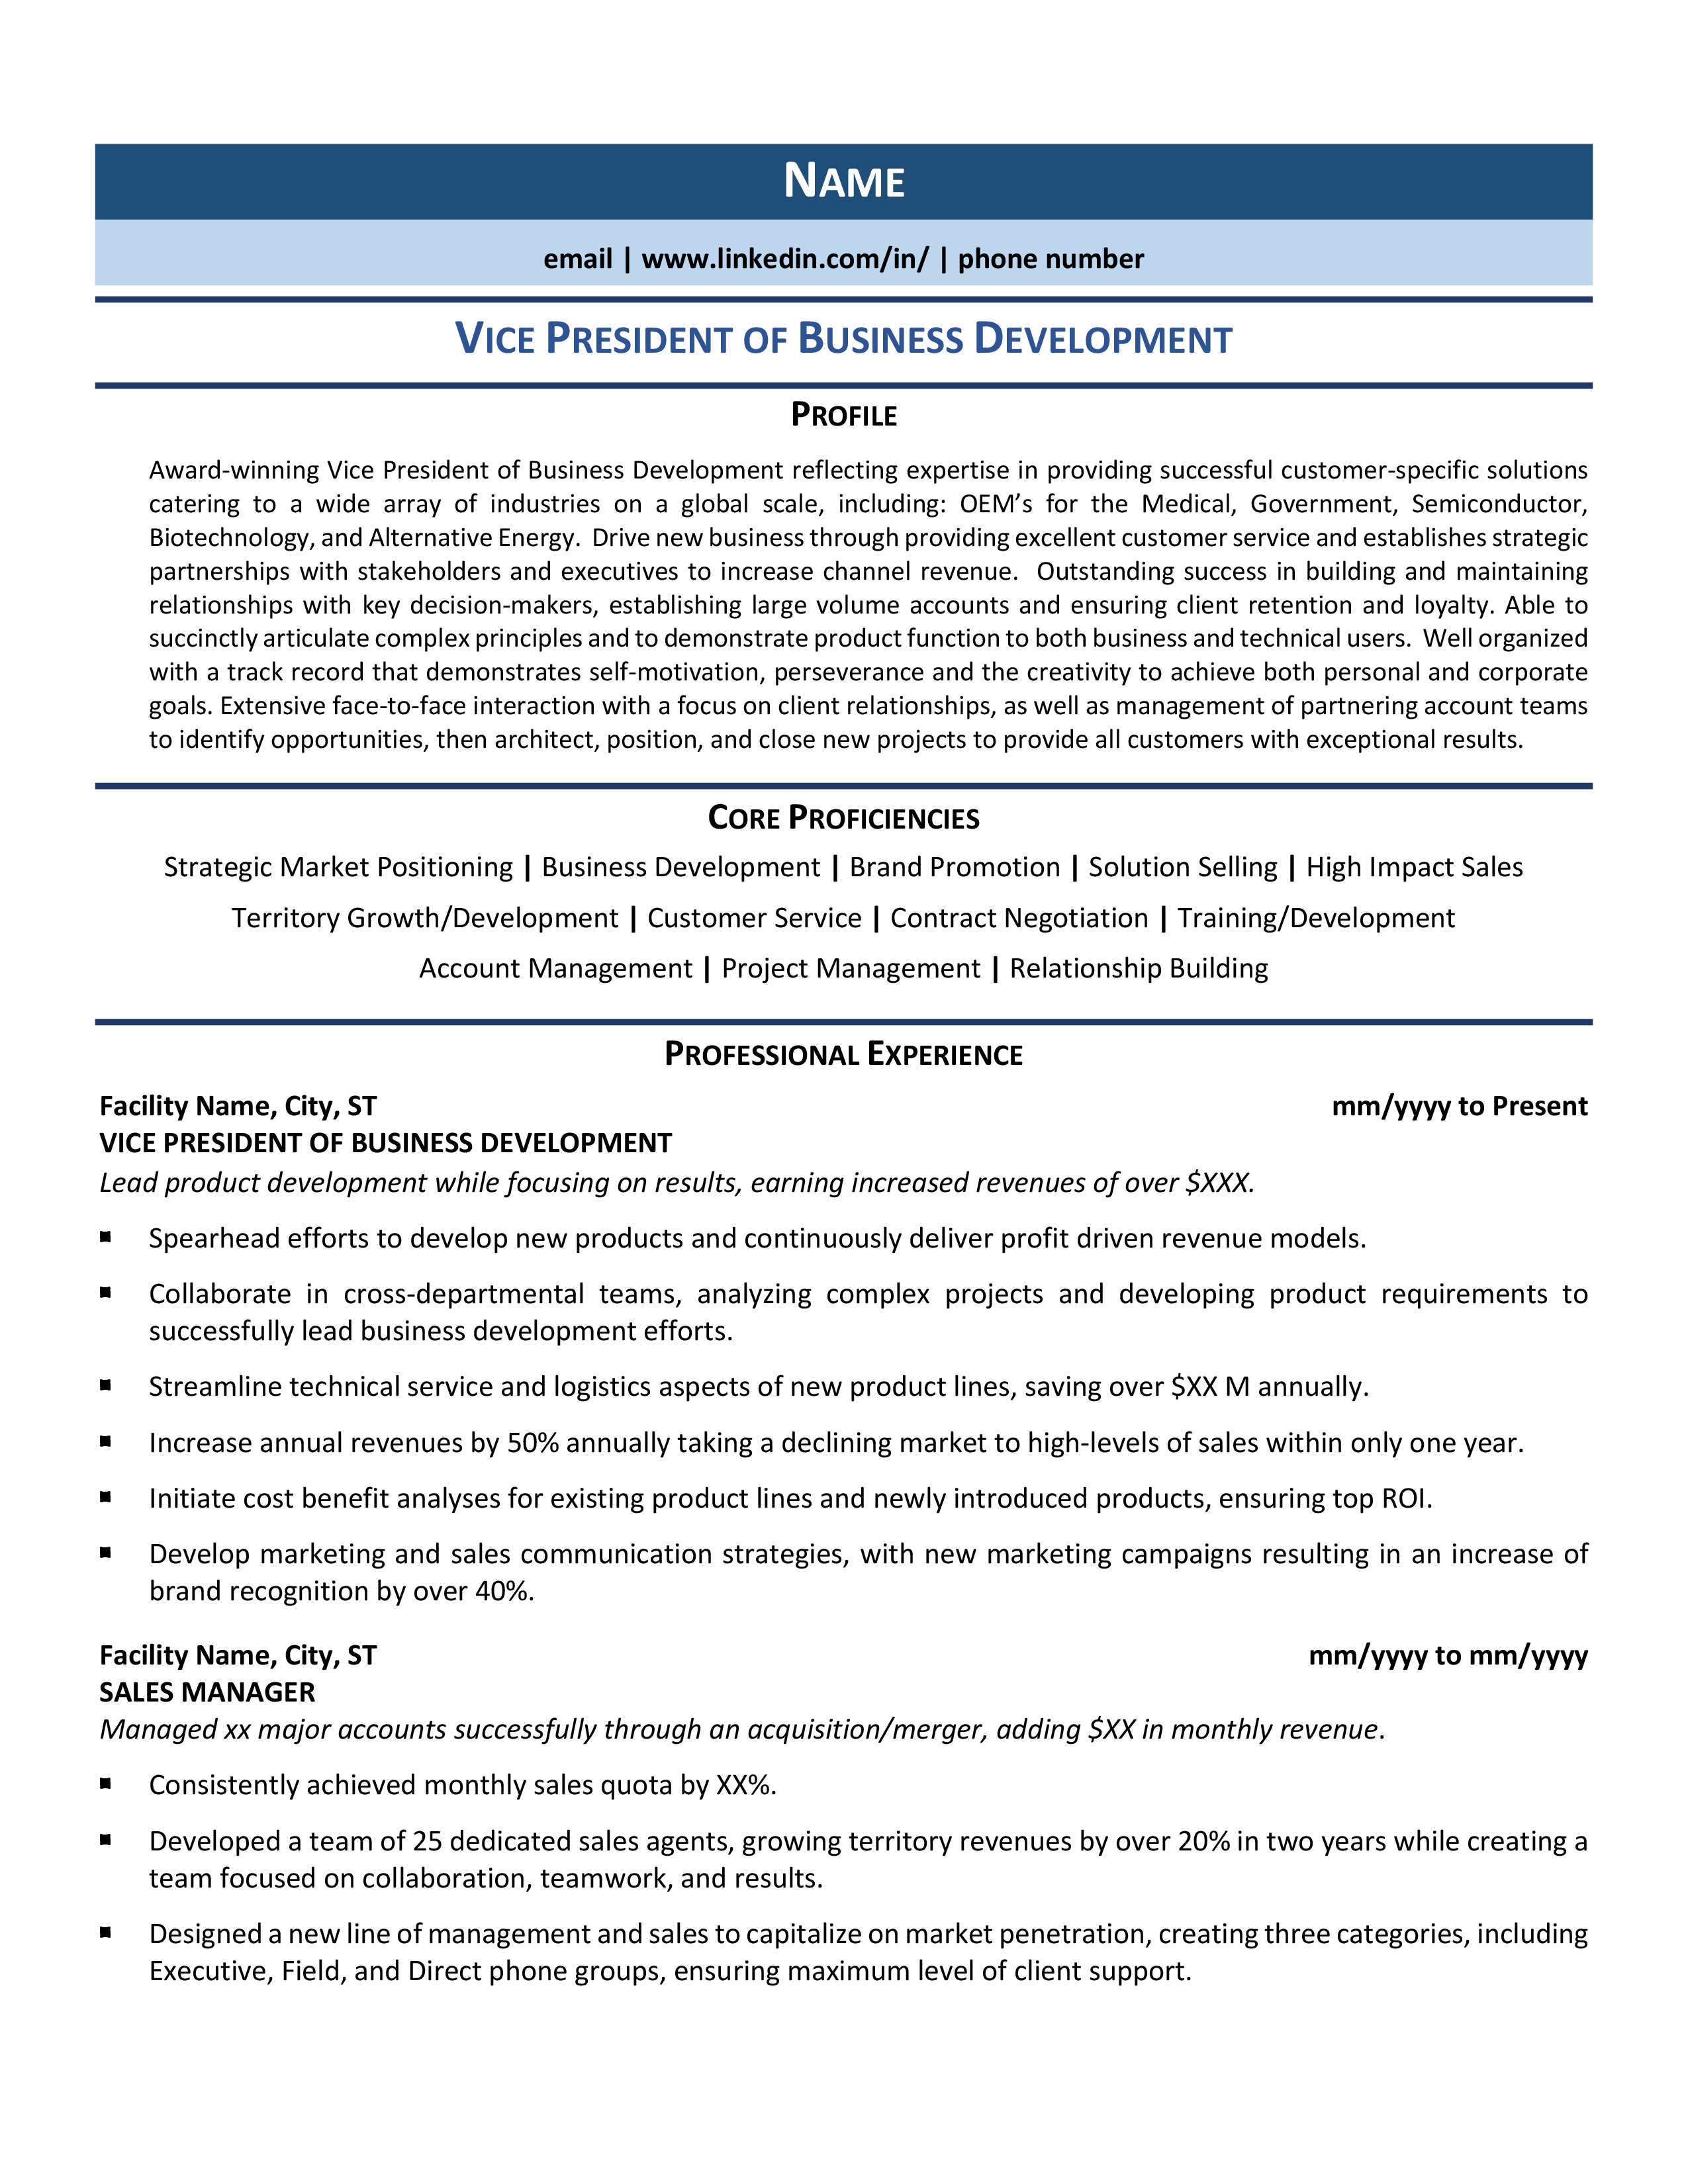 resume format for vice president